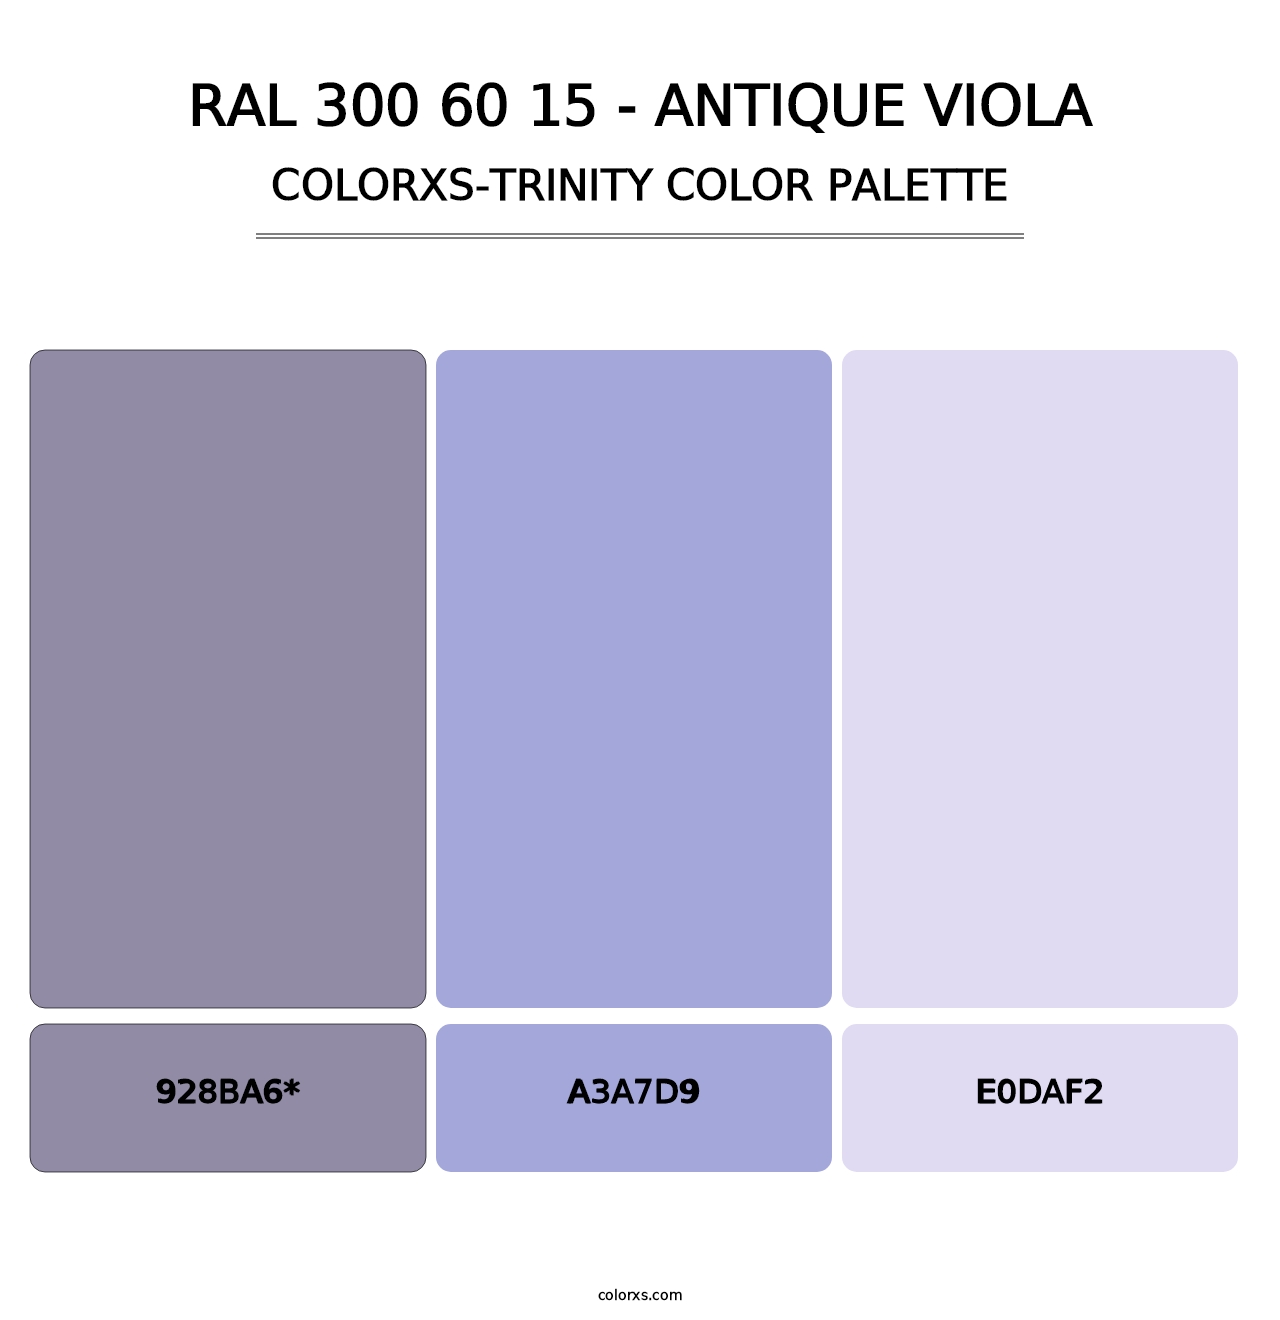 RAL 300 60 15 - Antique Viola - Colorxs Trinity Palette